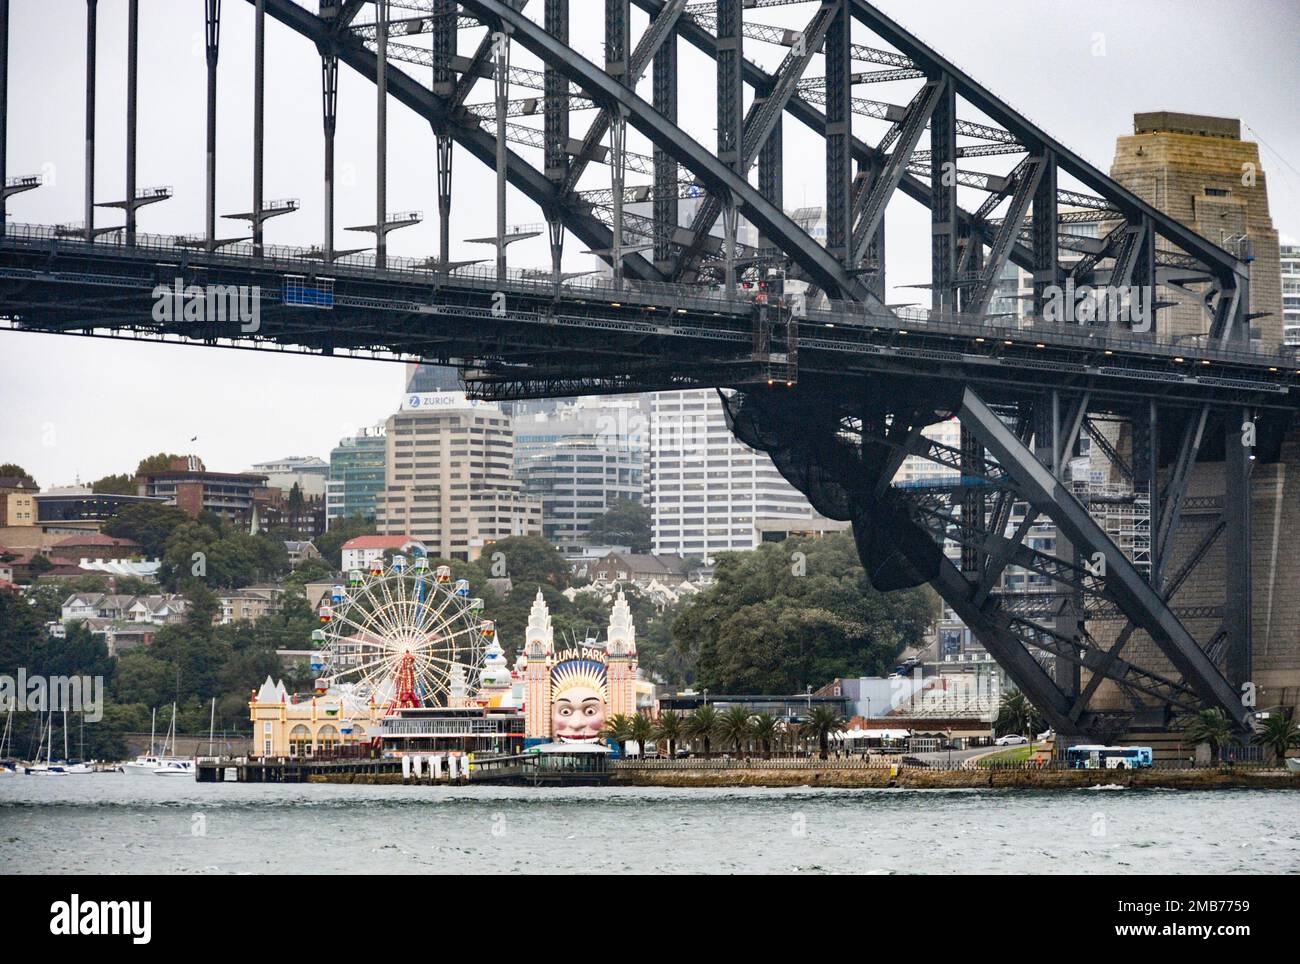 Sydney, Australia - February 13, 2017: The iconic Sydney Harbour Bridge and the Luna Park theme park. Stock Photo